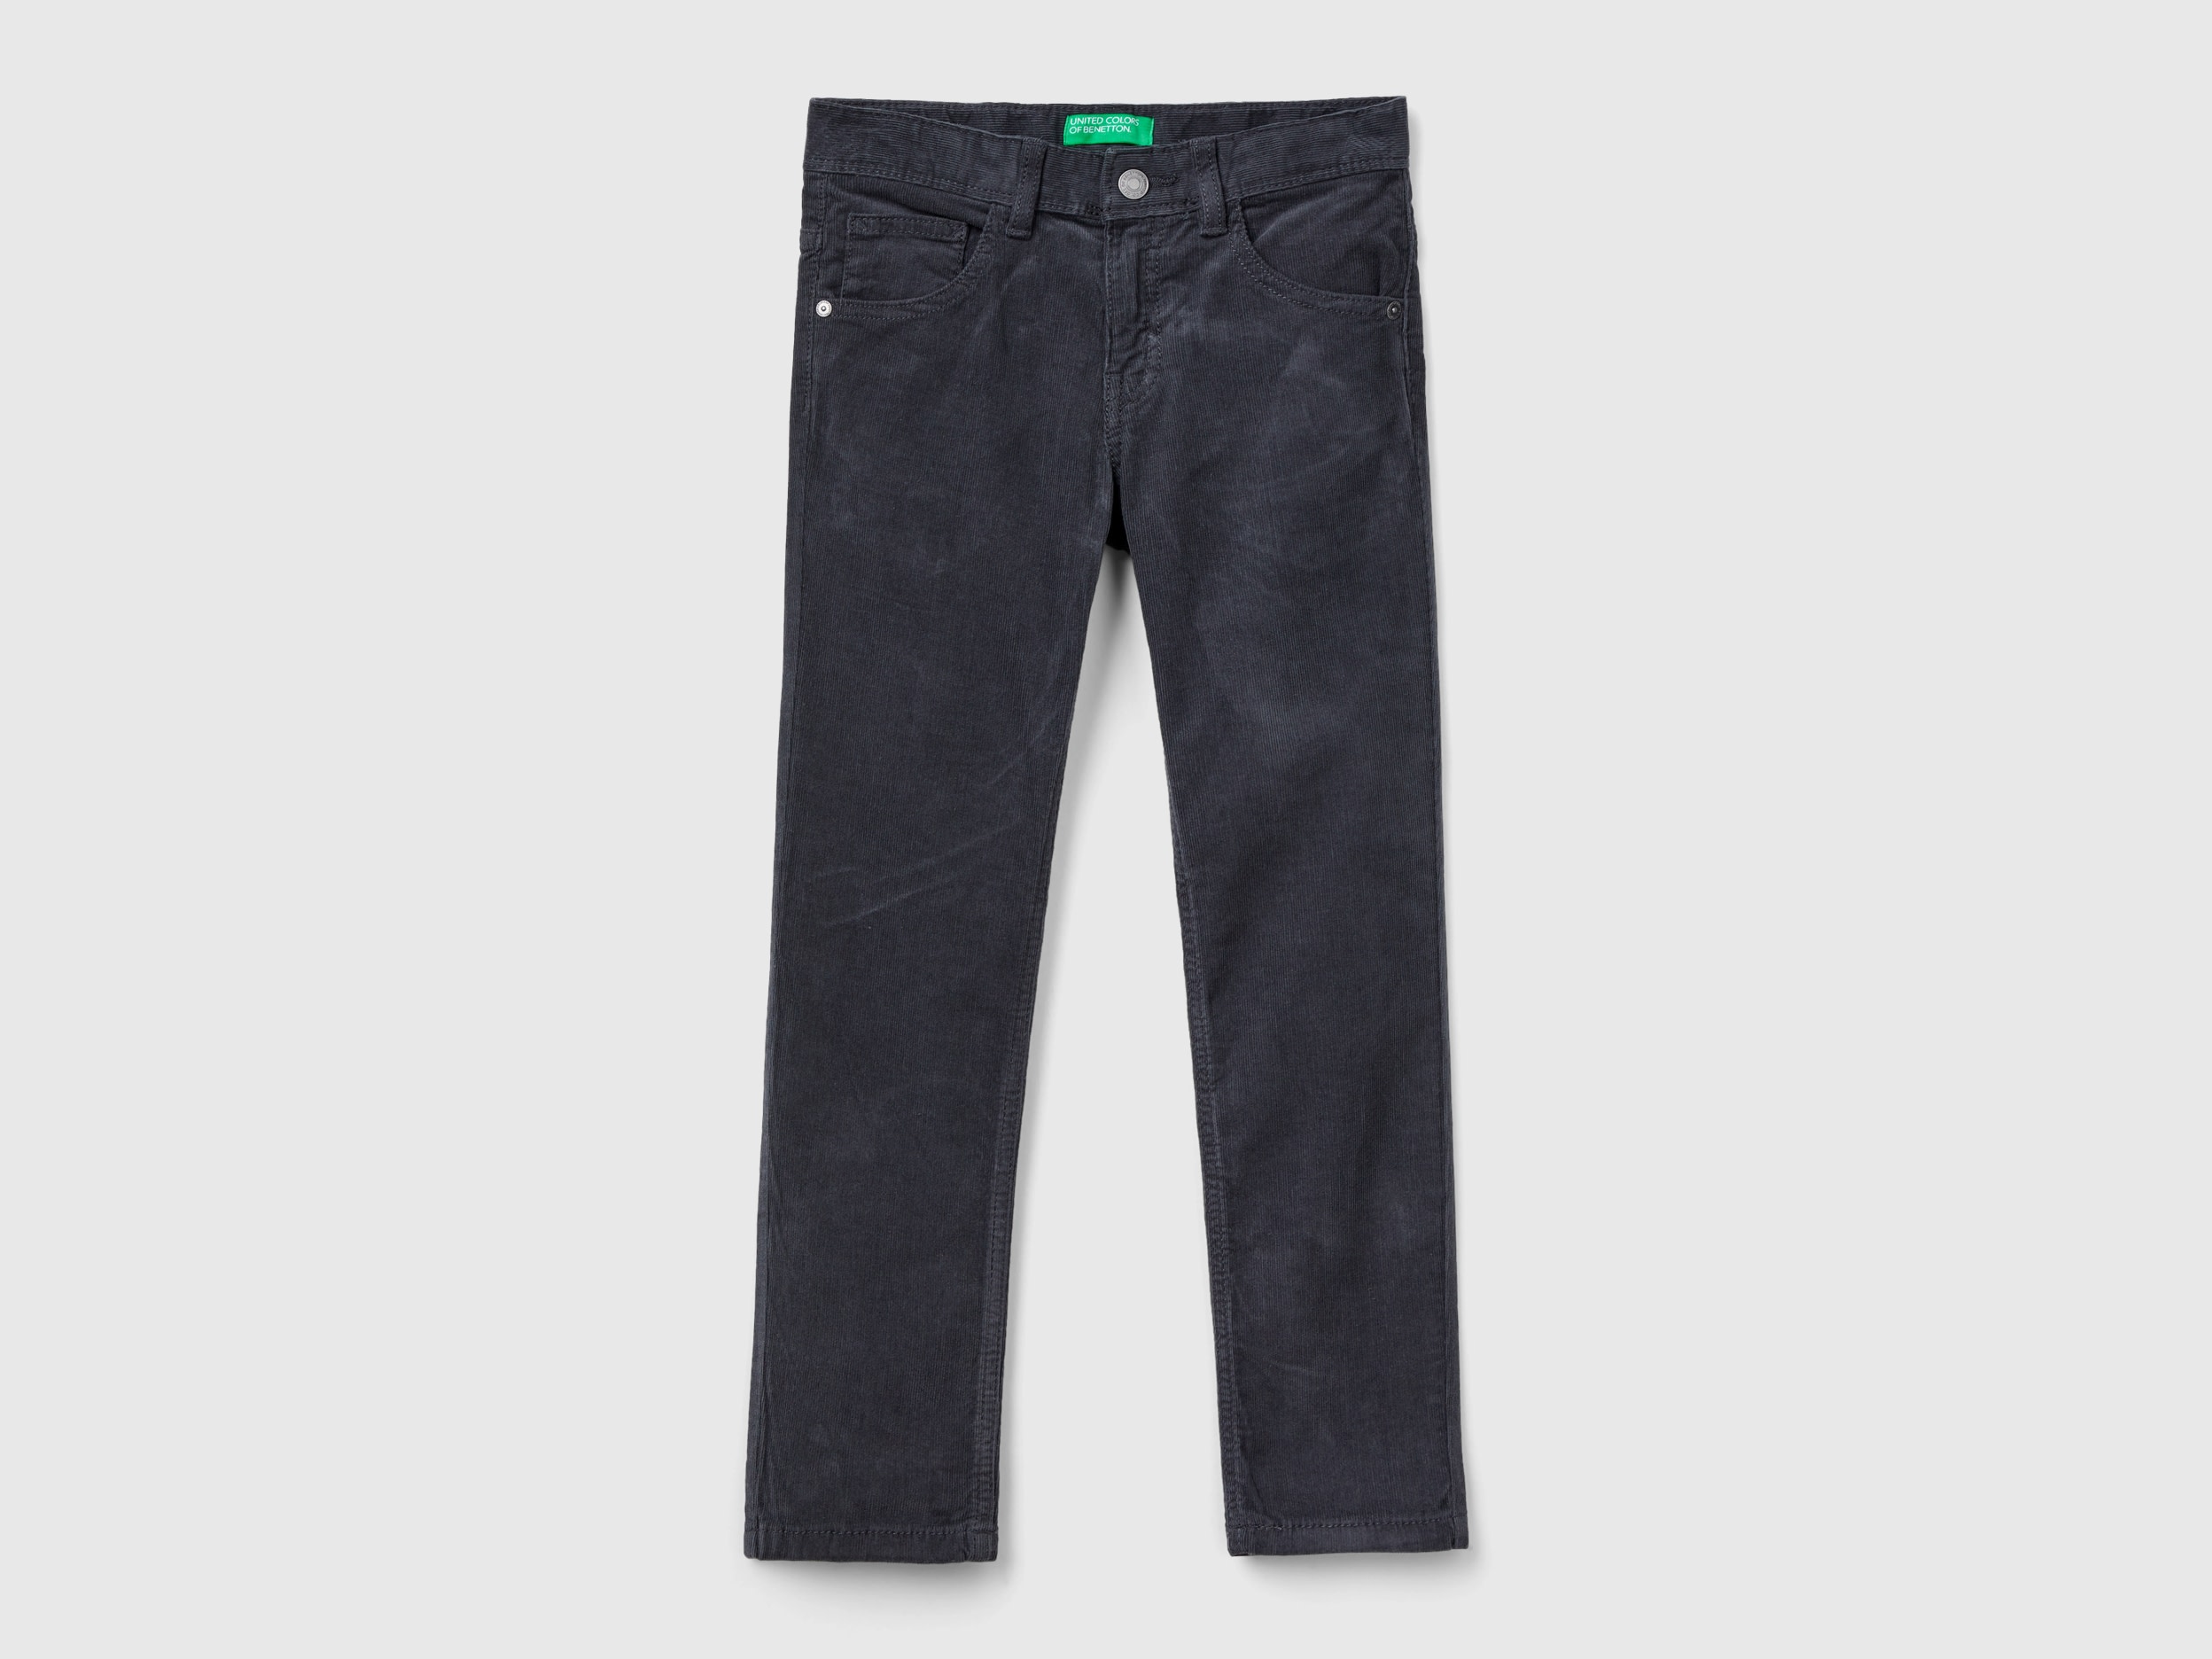 Benetton, Slim Fit Stretch Corduroy Trousers, size 3XL, Dark Gray, Kids